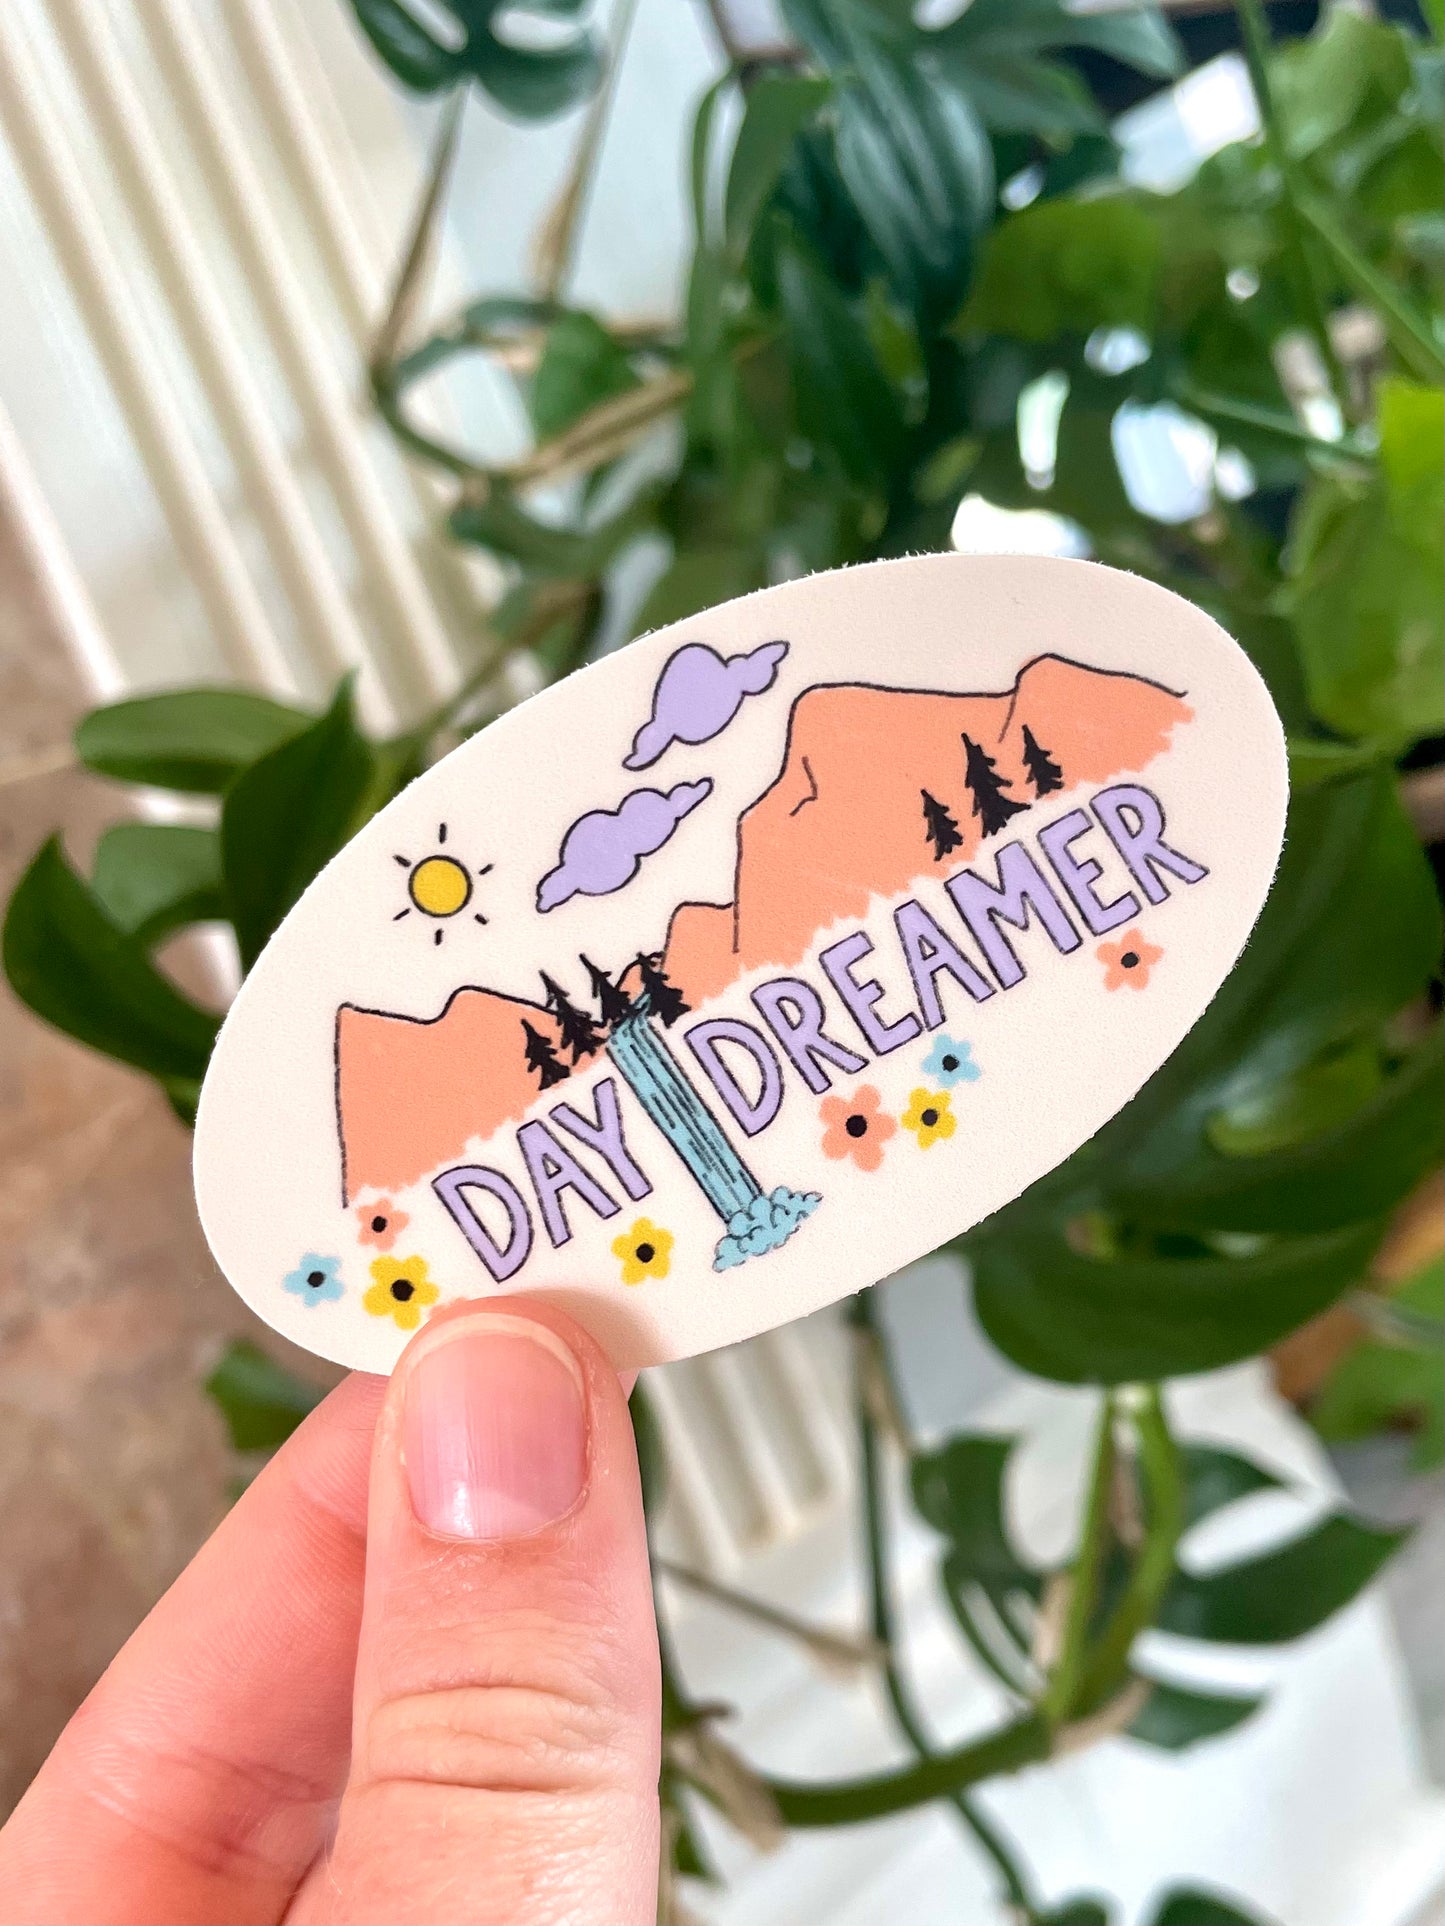 Day Dreamer Sticker